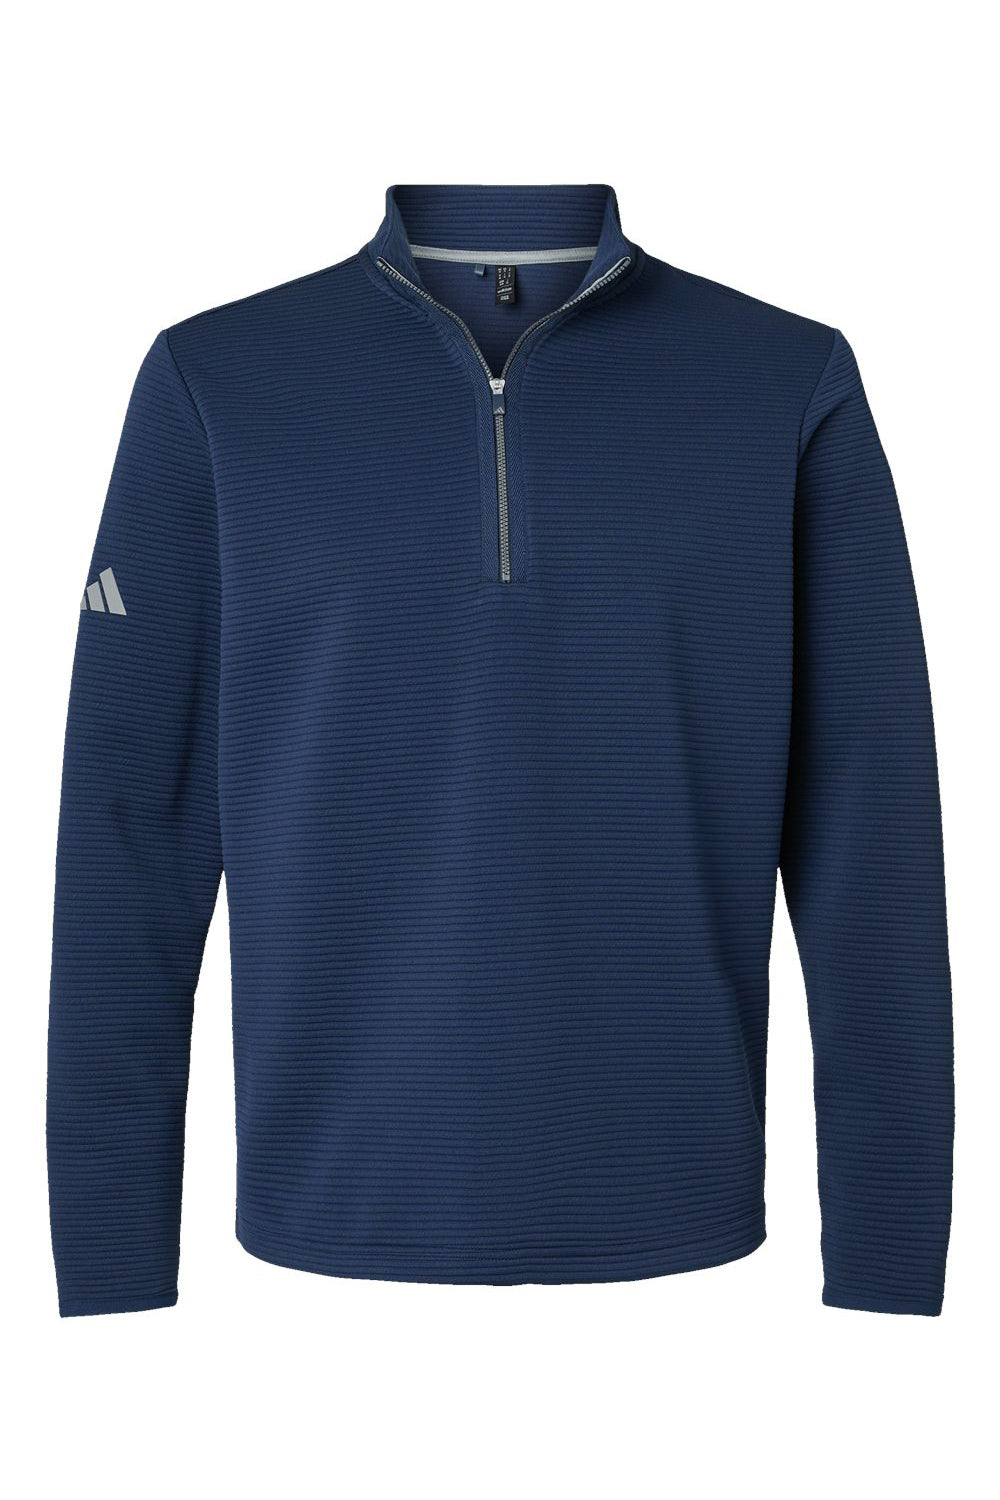 Adidas A588 Mens Spacer 1/4 Zip Sweatshirt Collegiate Navy Blue Flat Front